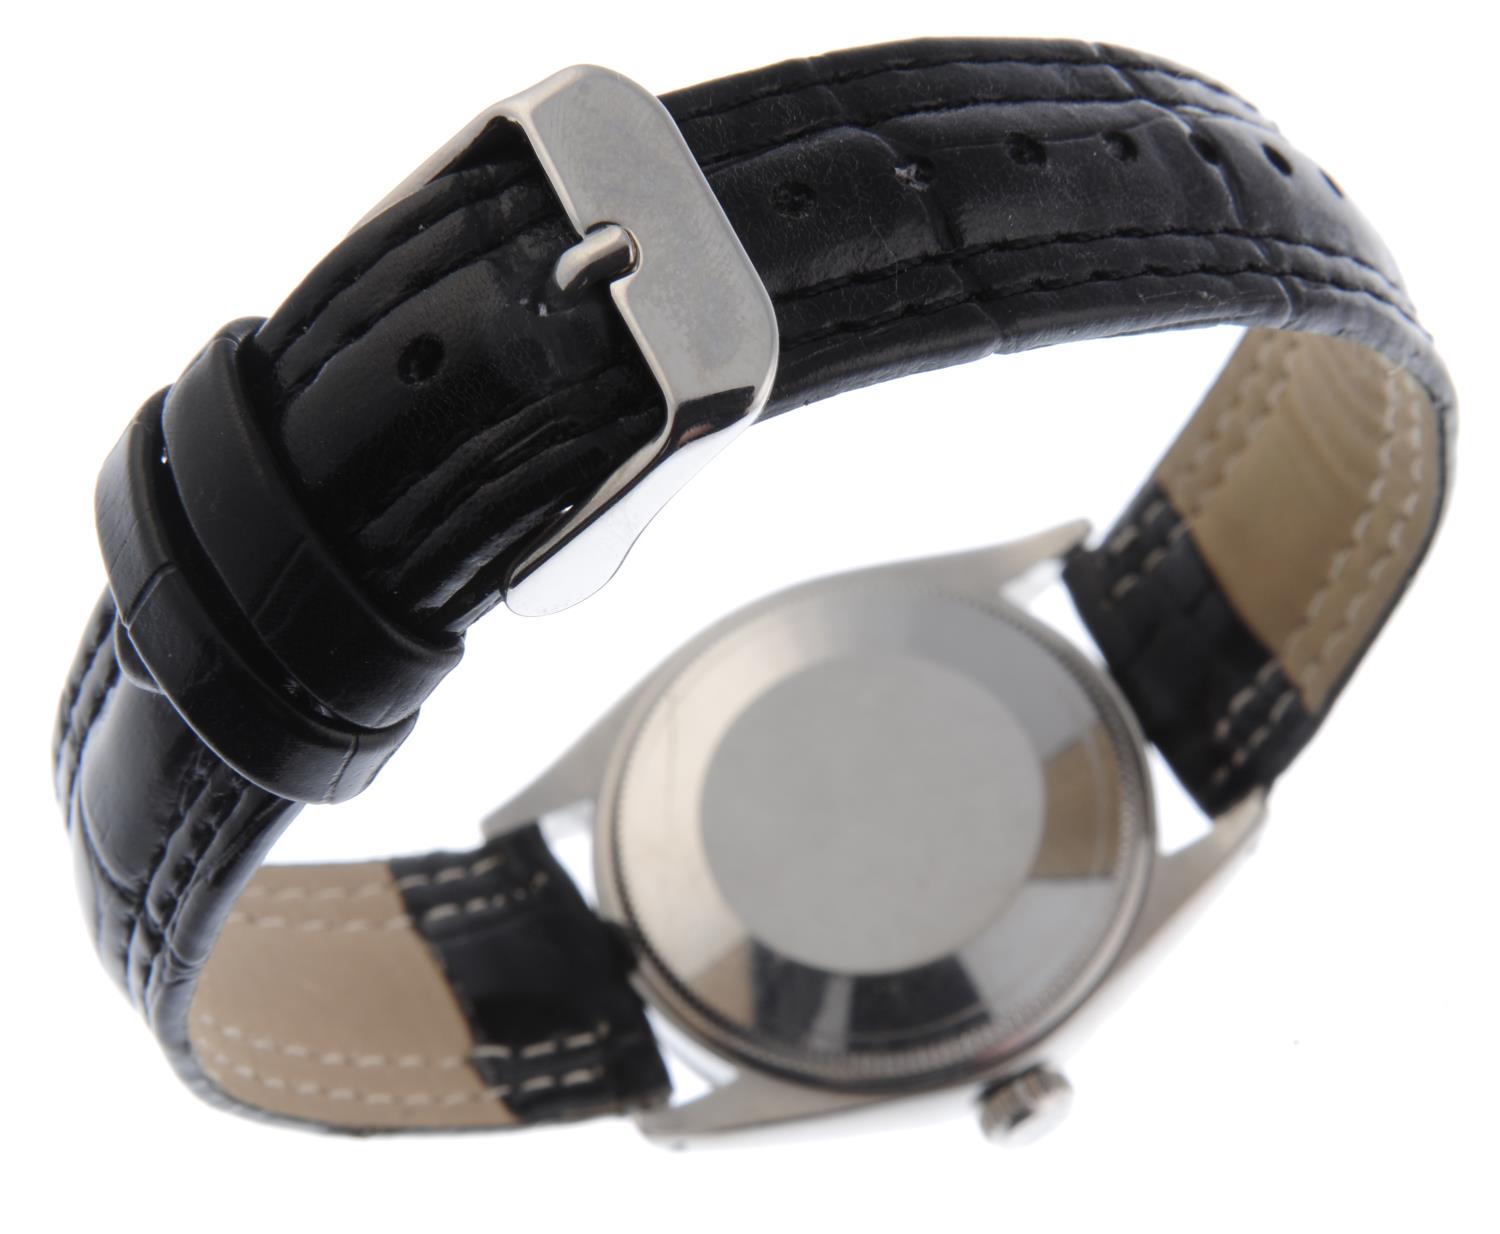 ROLEX - a gentleman's Oyster Perpetual Explorer wrist watch. - Image 2 of 4